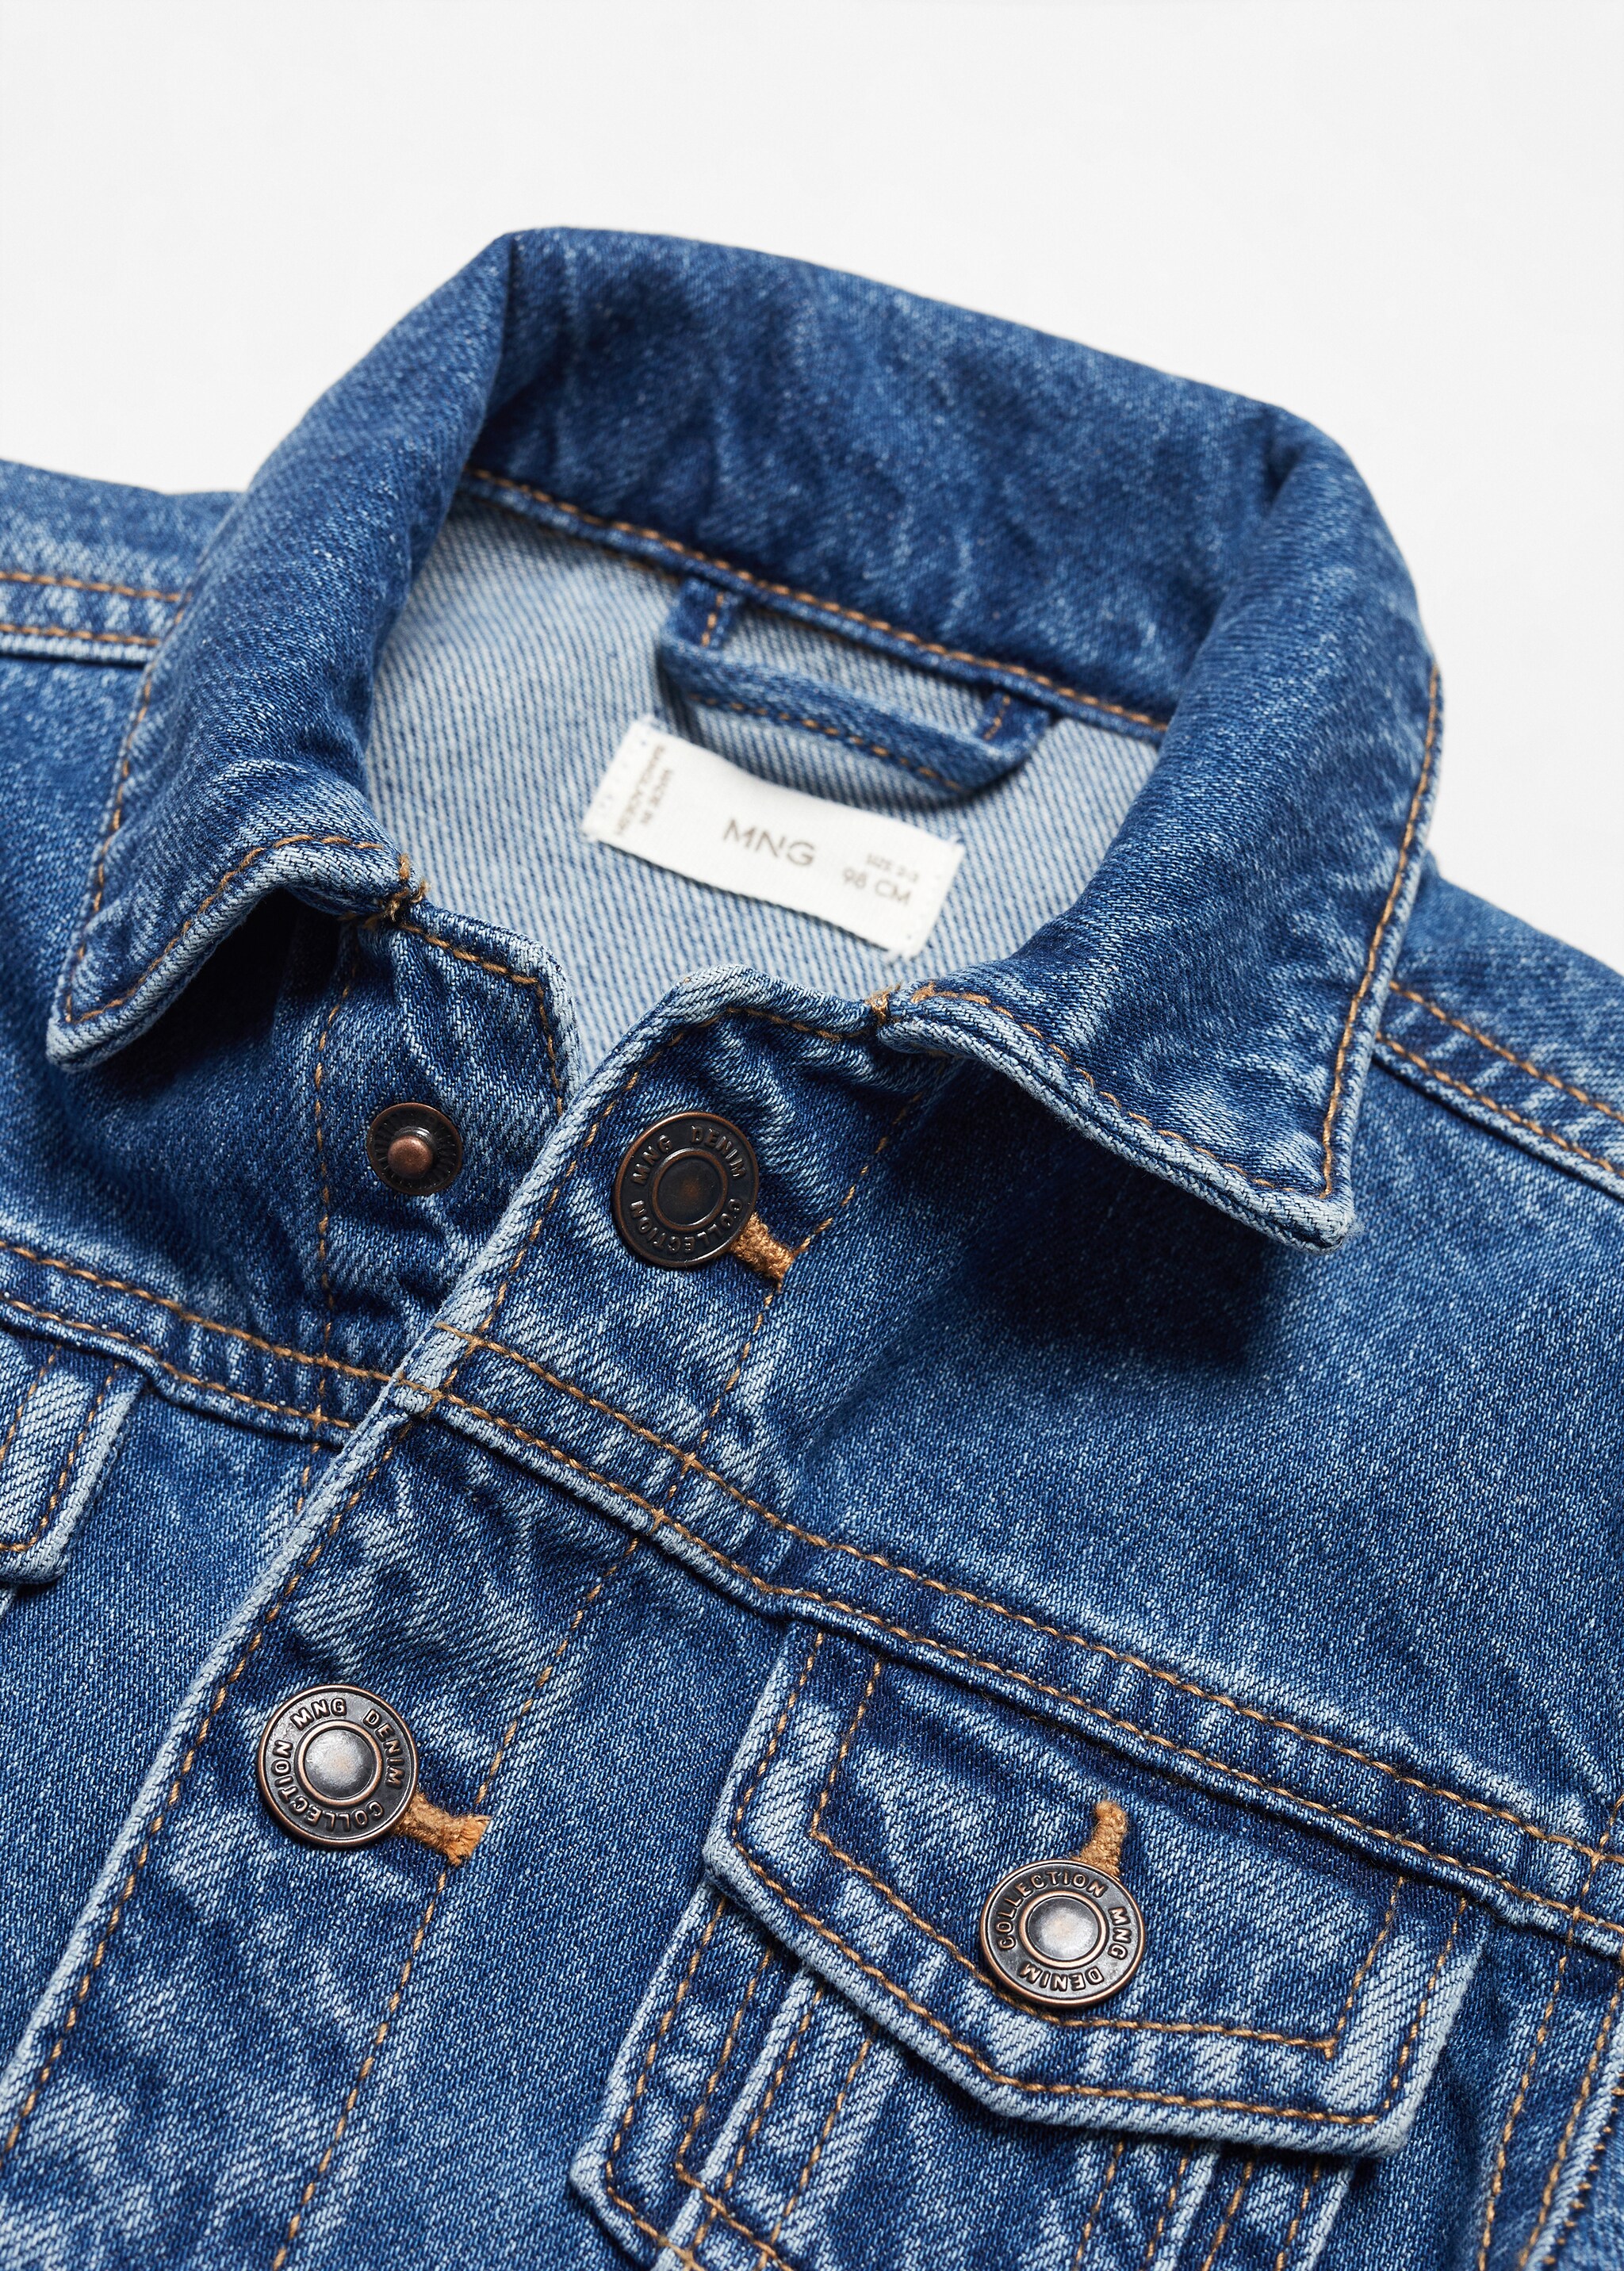 Cotton denim jacket - Details of the article 0